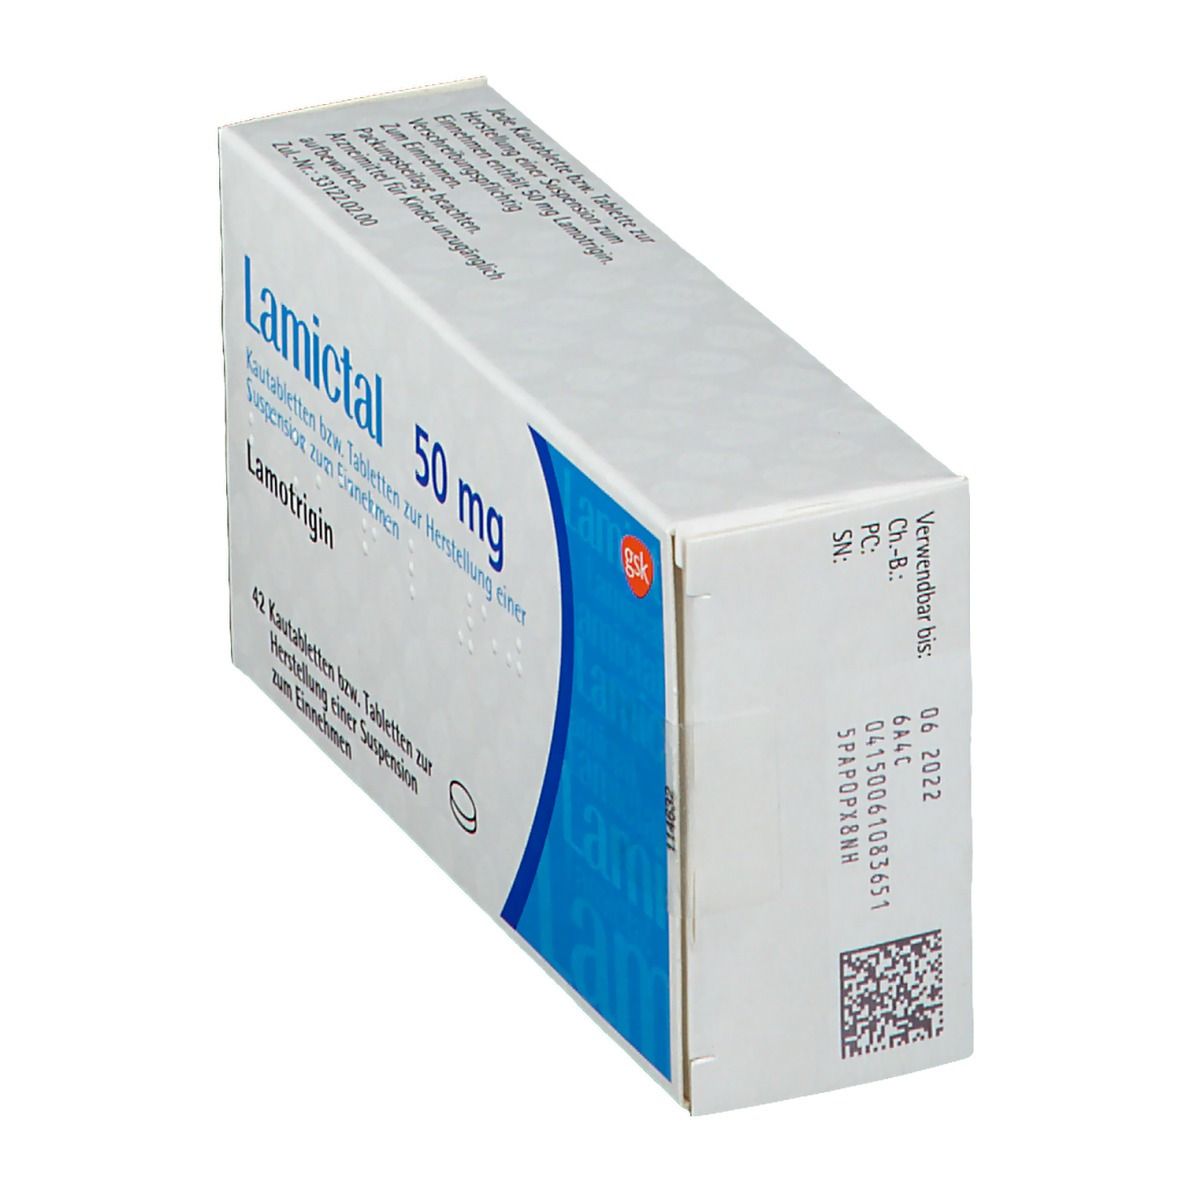 Lamictal 50 mg